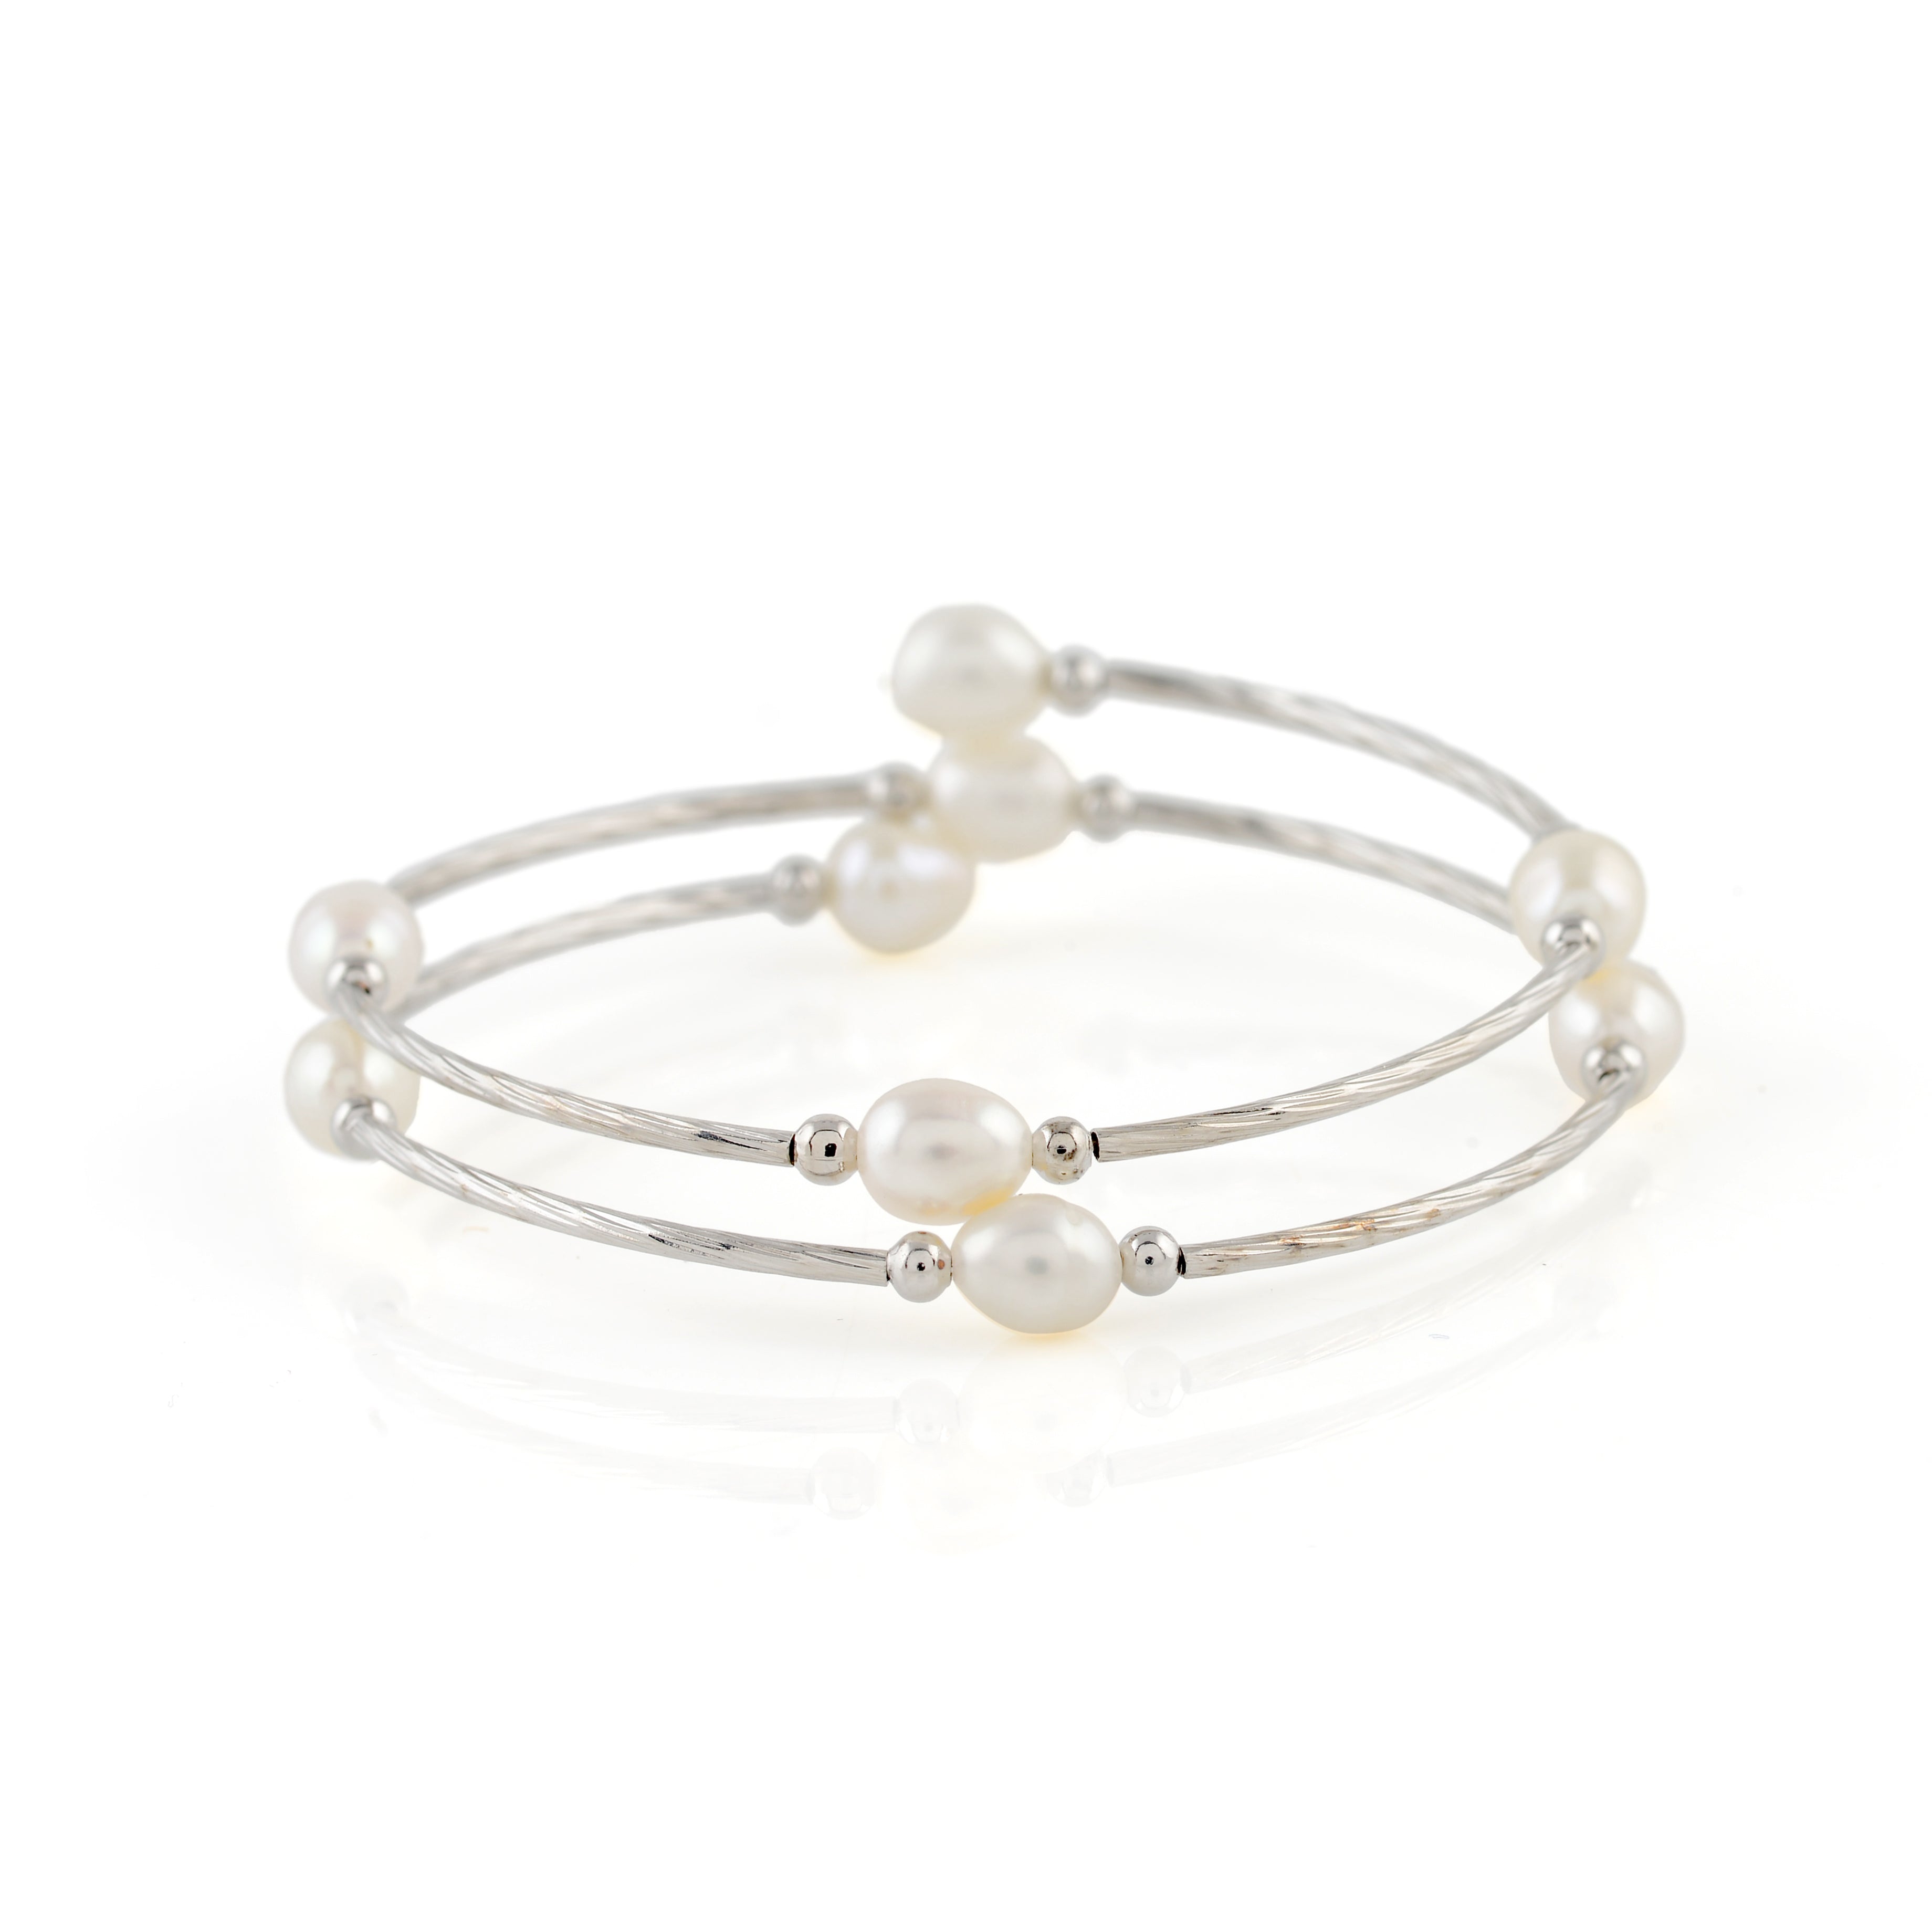 Freshwater White Pearl bracelet in Silver